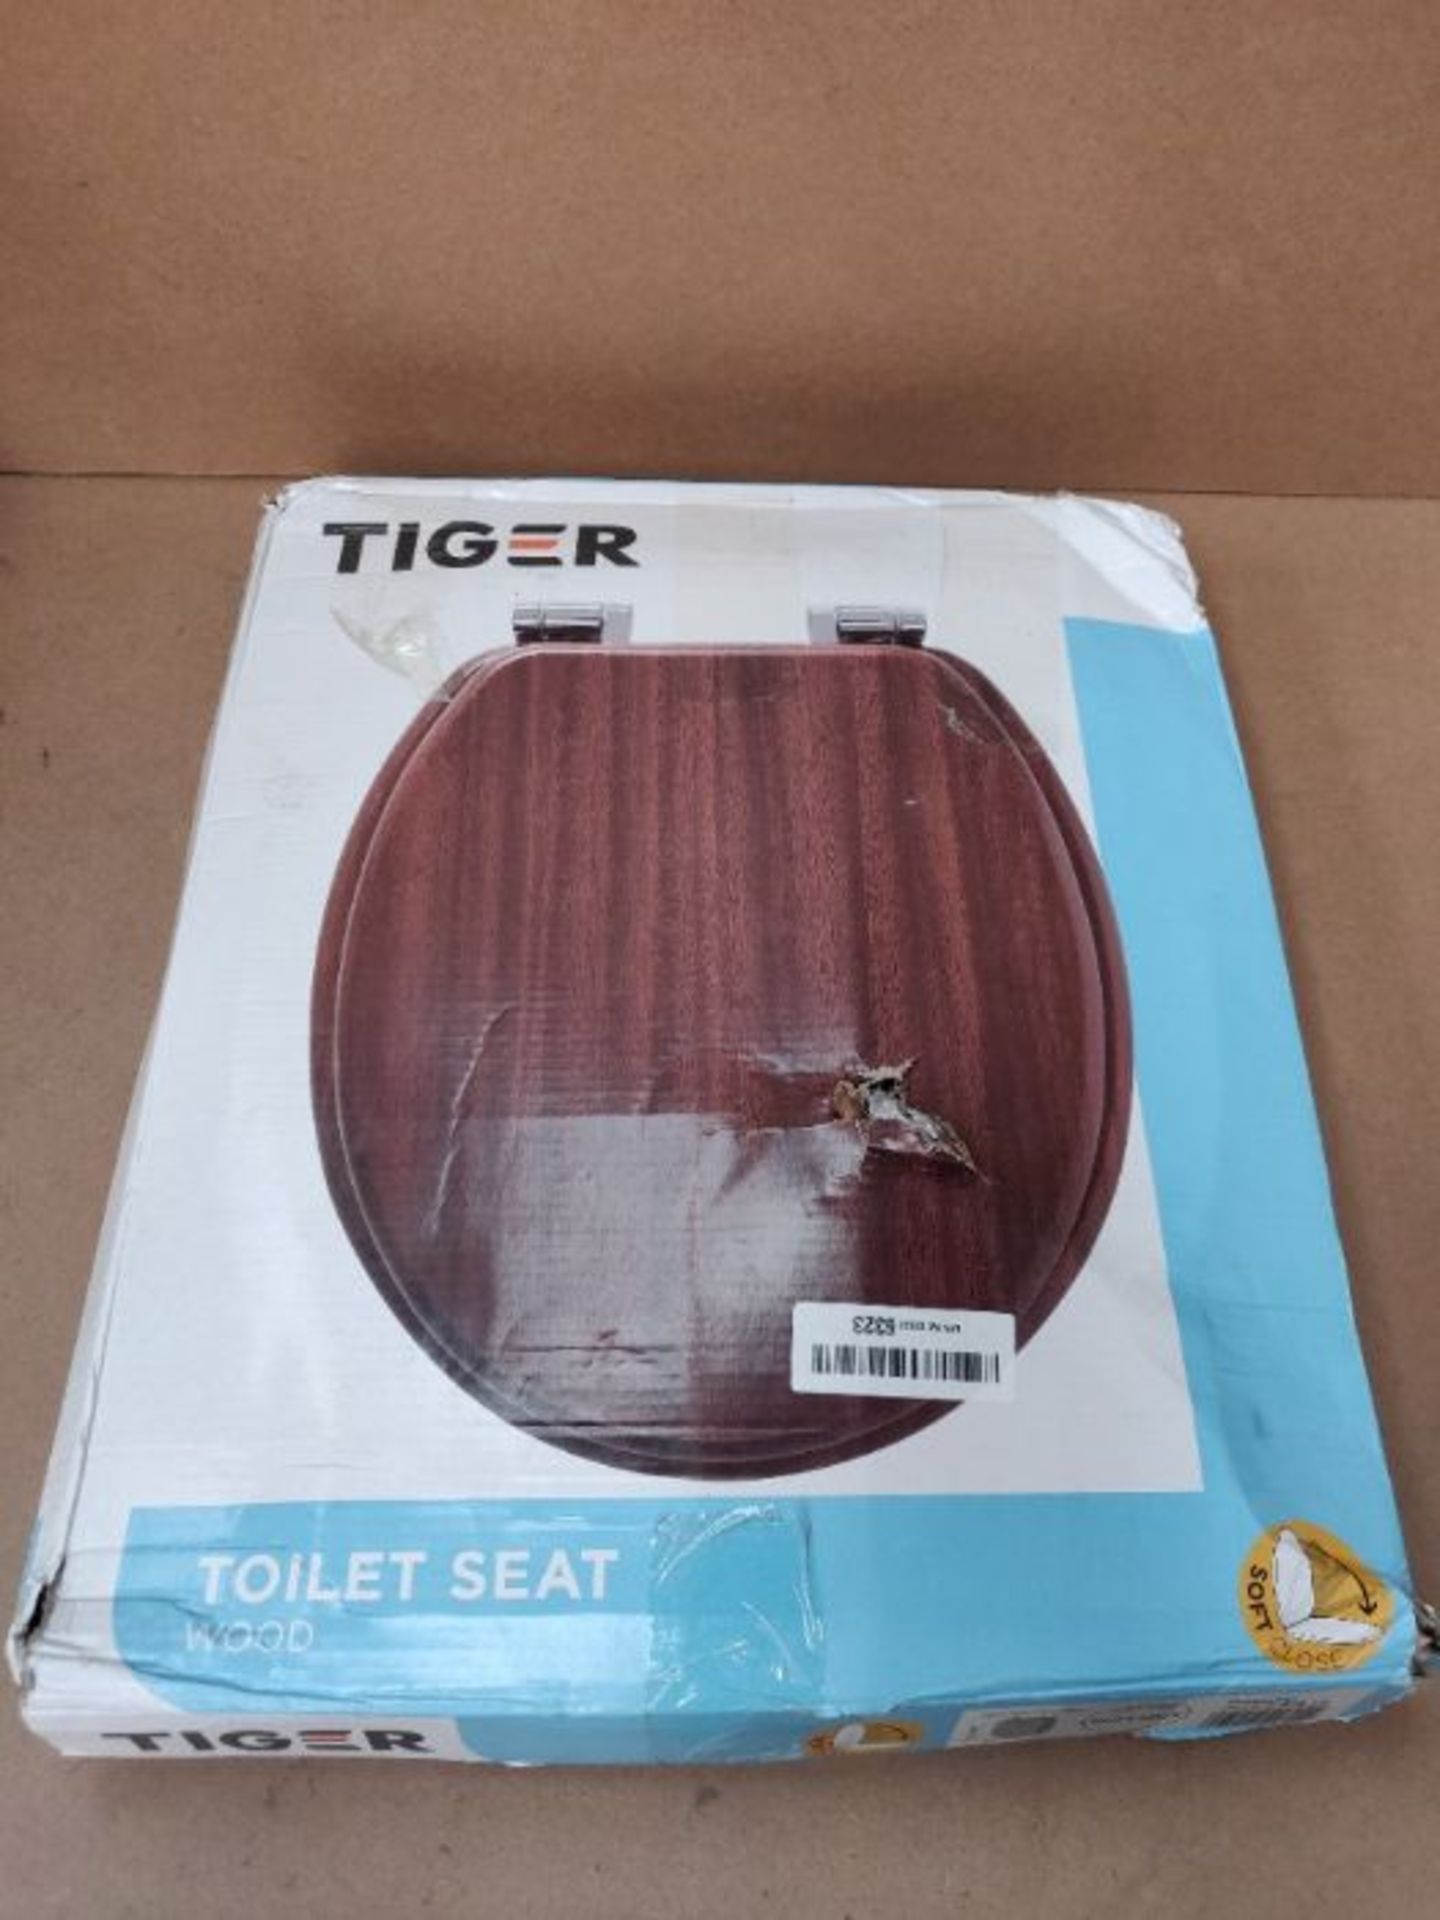 [CRACKED] Tiger Douglas Toilet Seat, MDF, Walnut Wood, 43 x 37.5 x 5 cm - Image 2 of 3